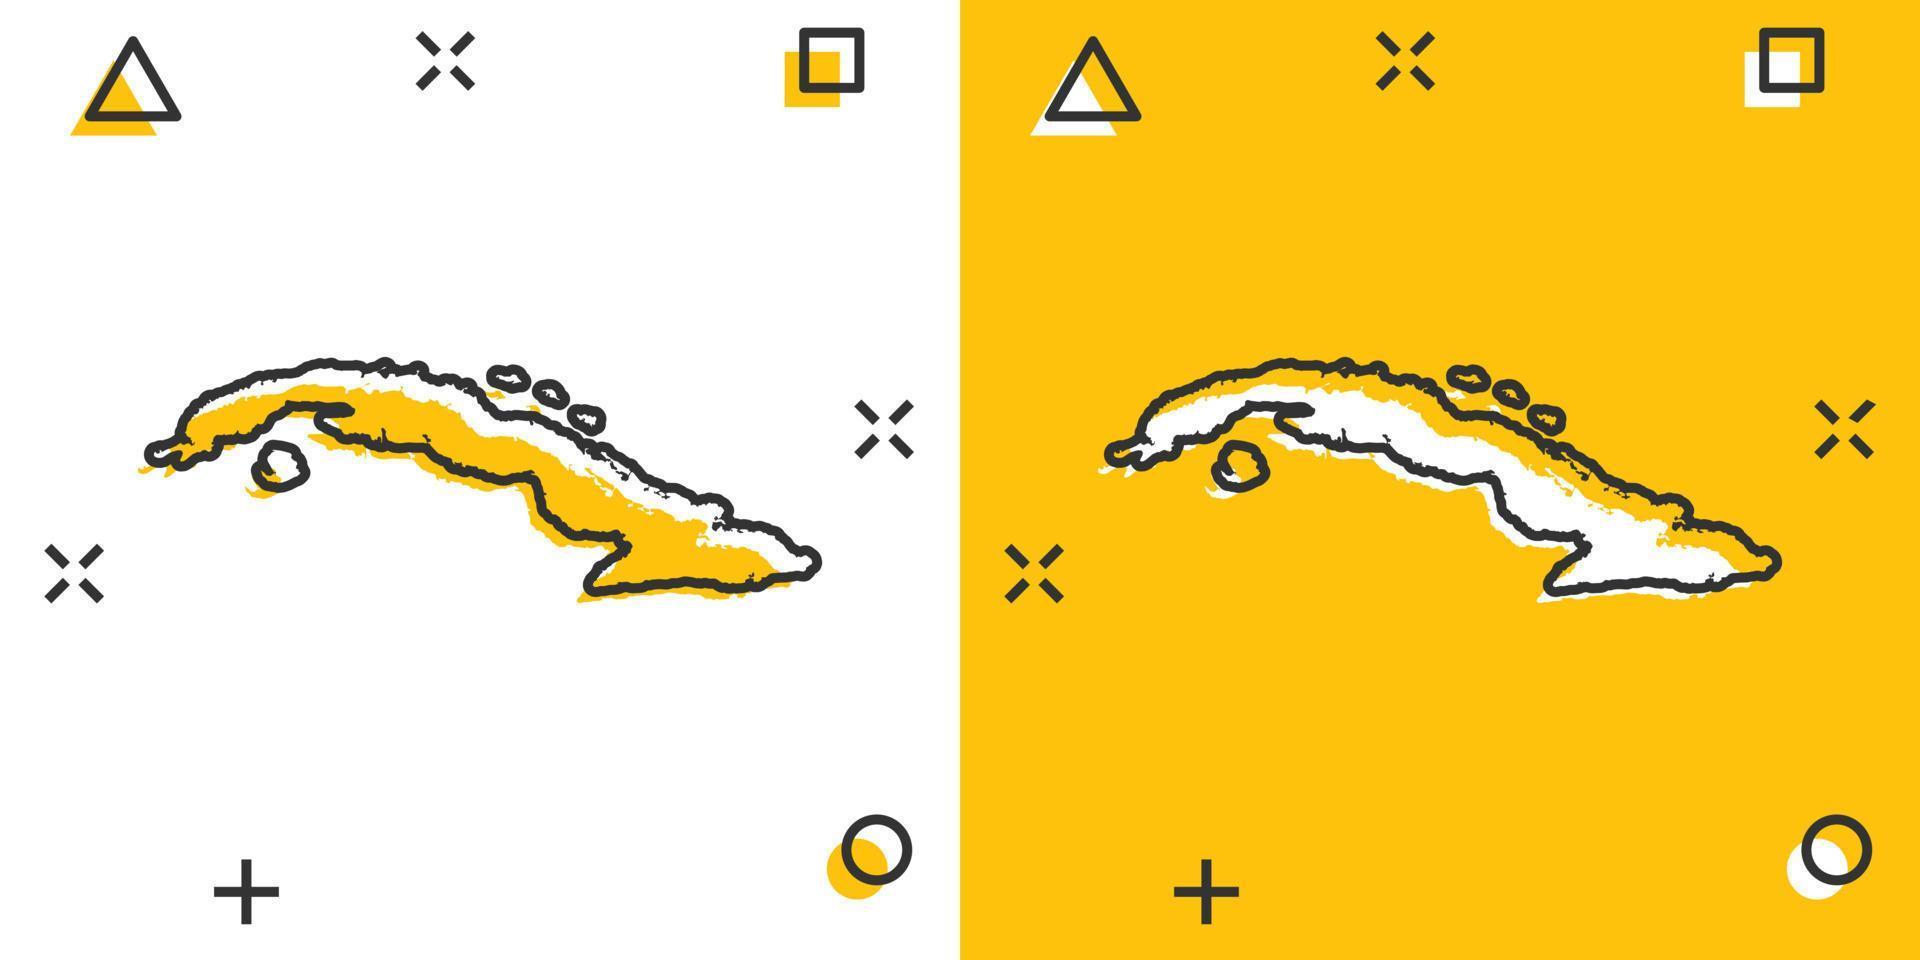 Vektor-Cartoon-Kuba-Kartensymbol im Comic-Stil. kuba zeichen illustration piktogramm. Kartografie-Karten-Business-Splash-Effekt-Konzept. vektor